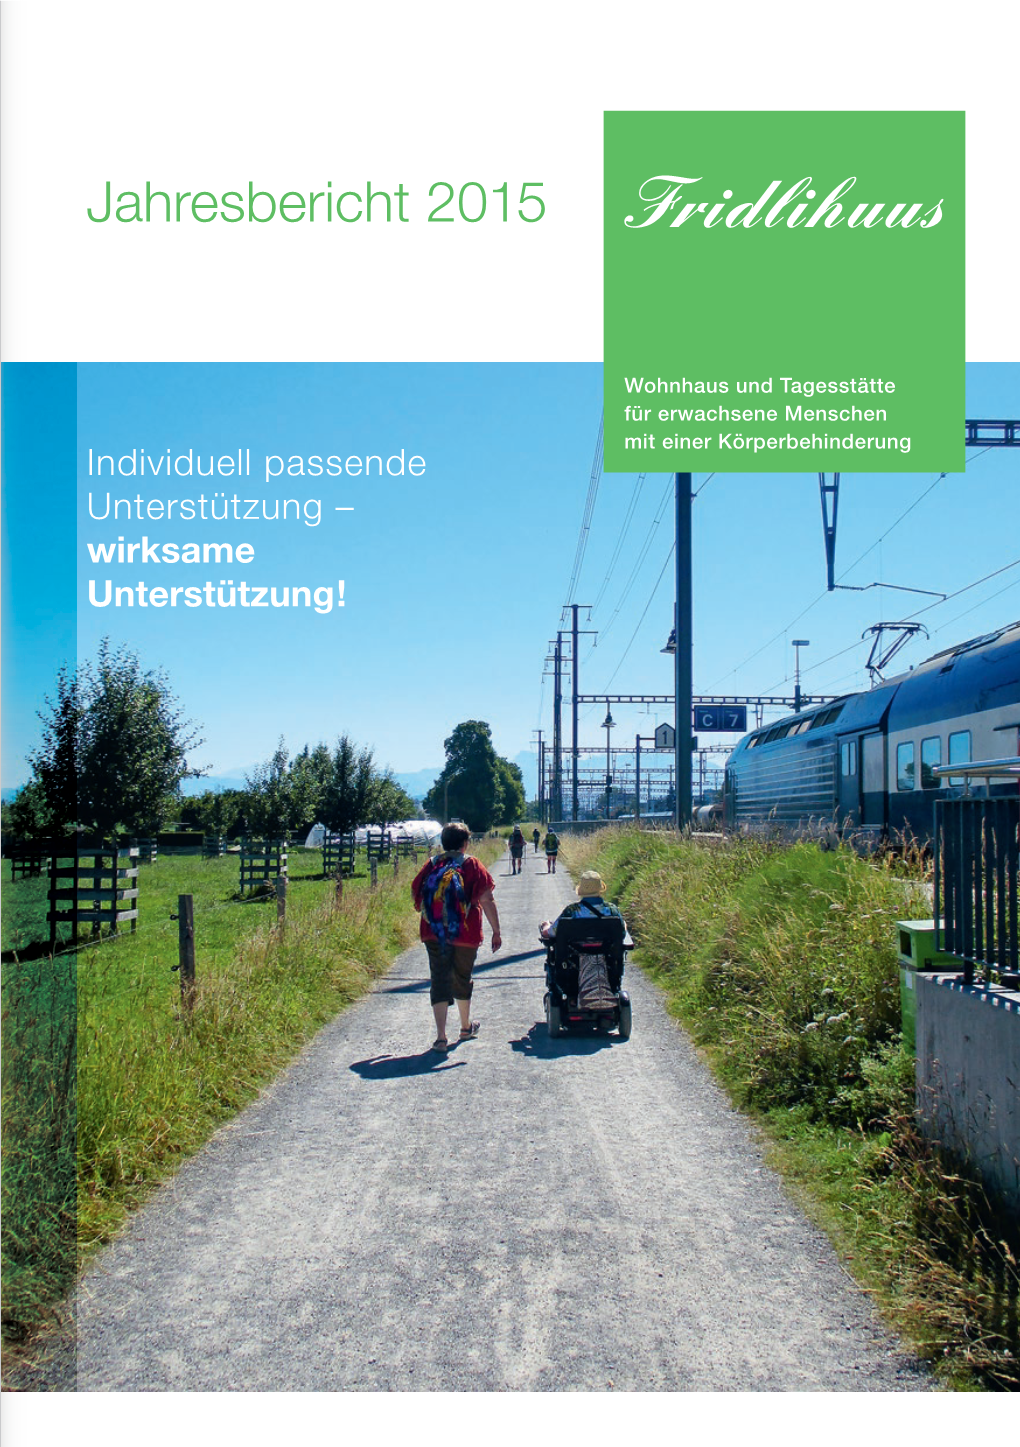 Jahresbericht 2015 Fridlihuus